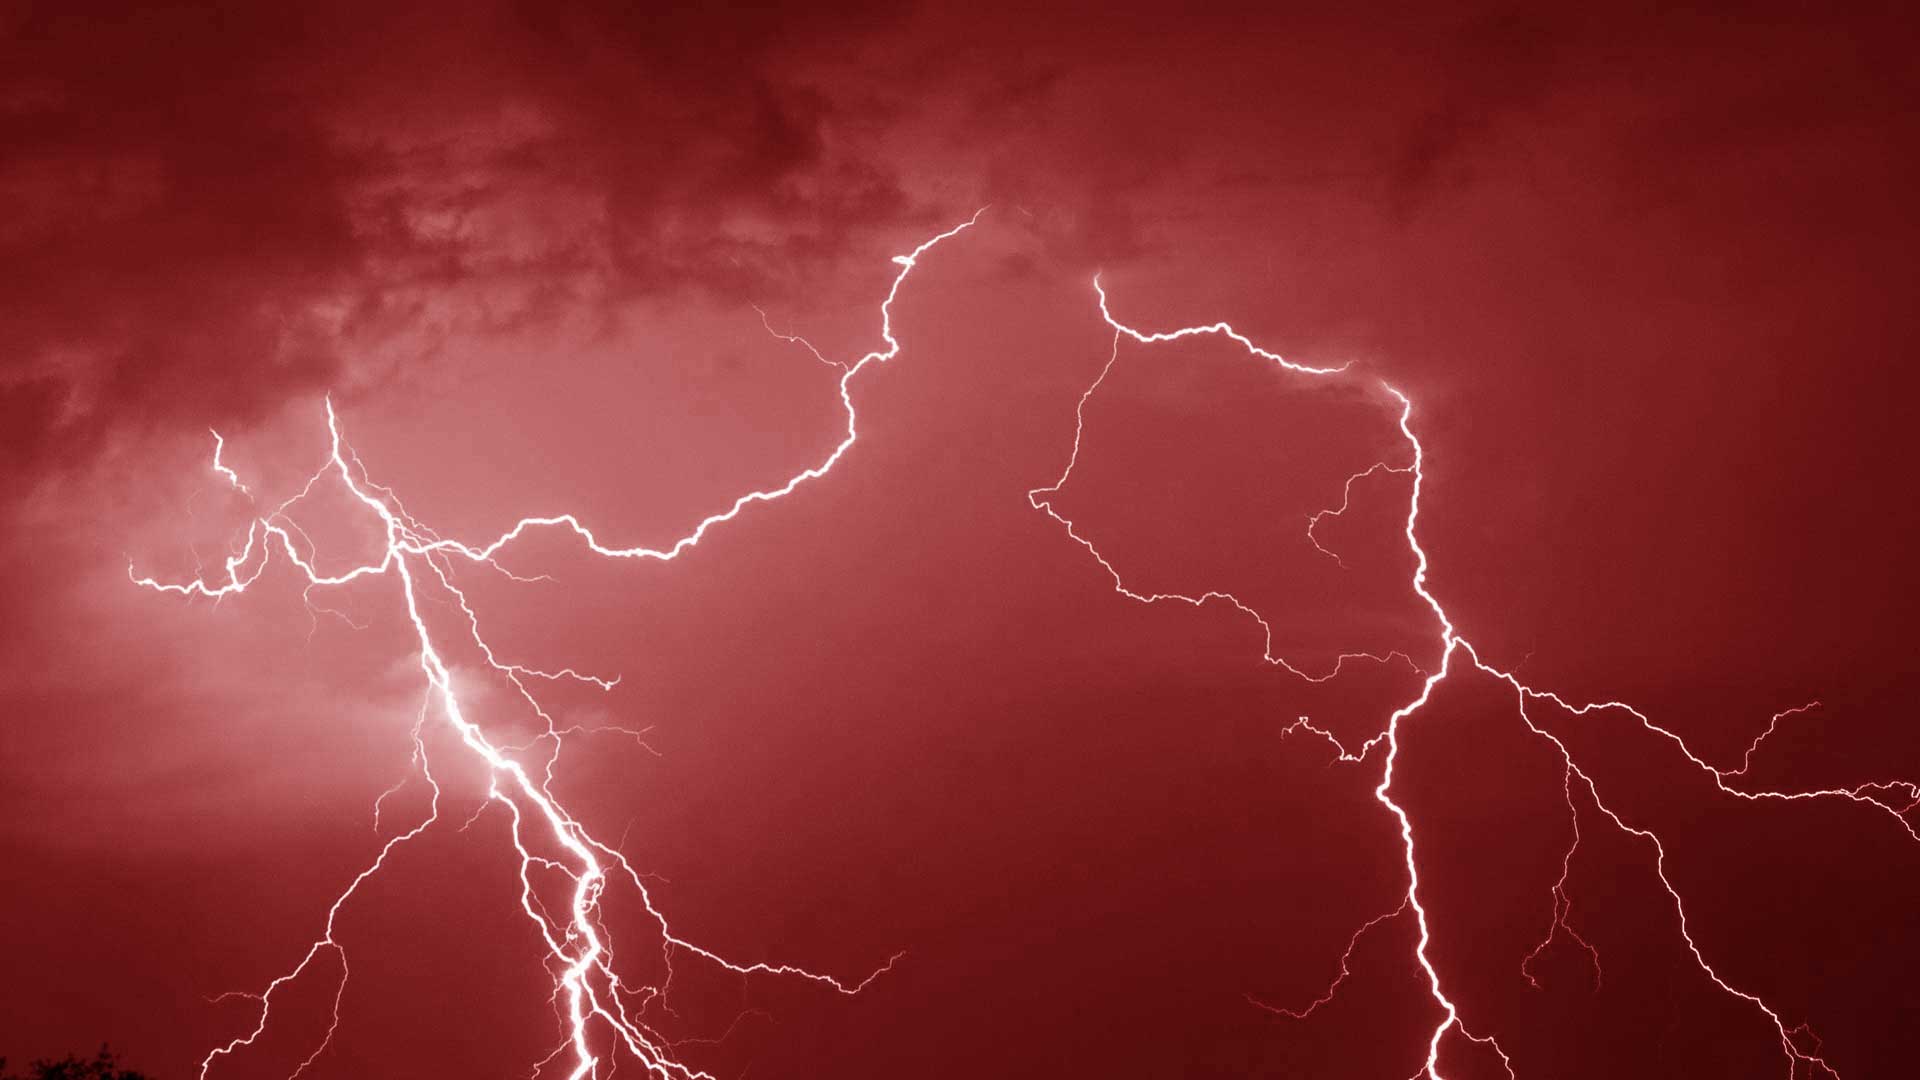 lightning-storm-red | K94 Rocks | It's What We Do! | Celina / St. Marys, OH